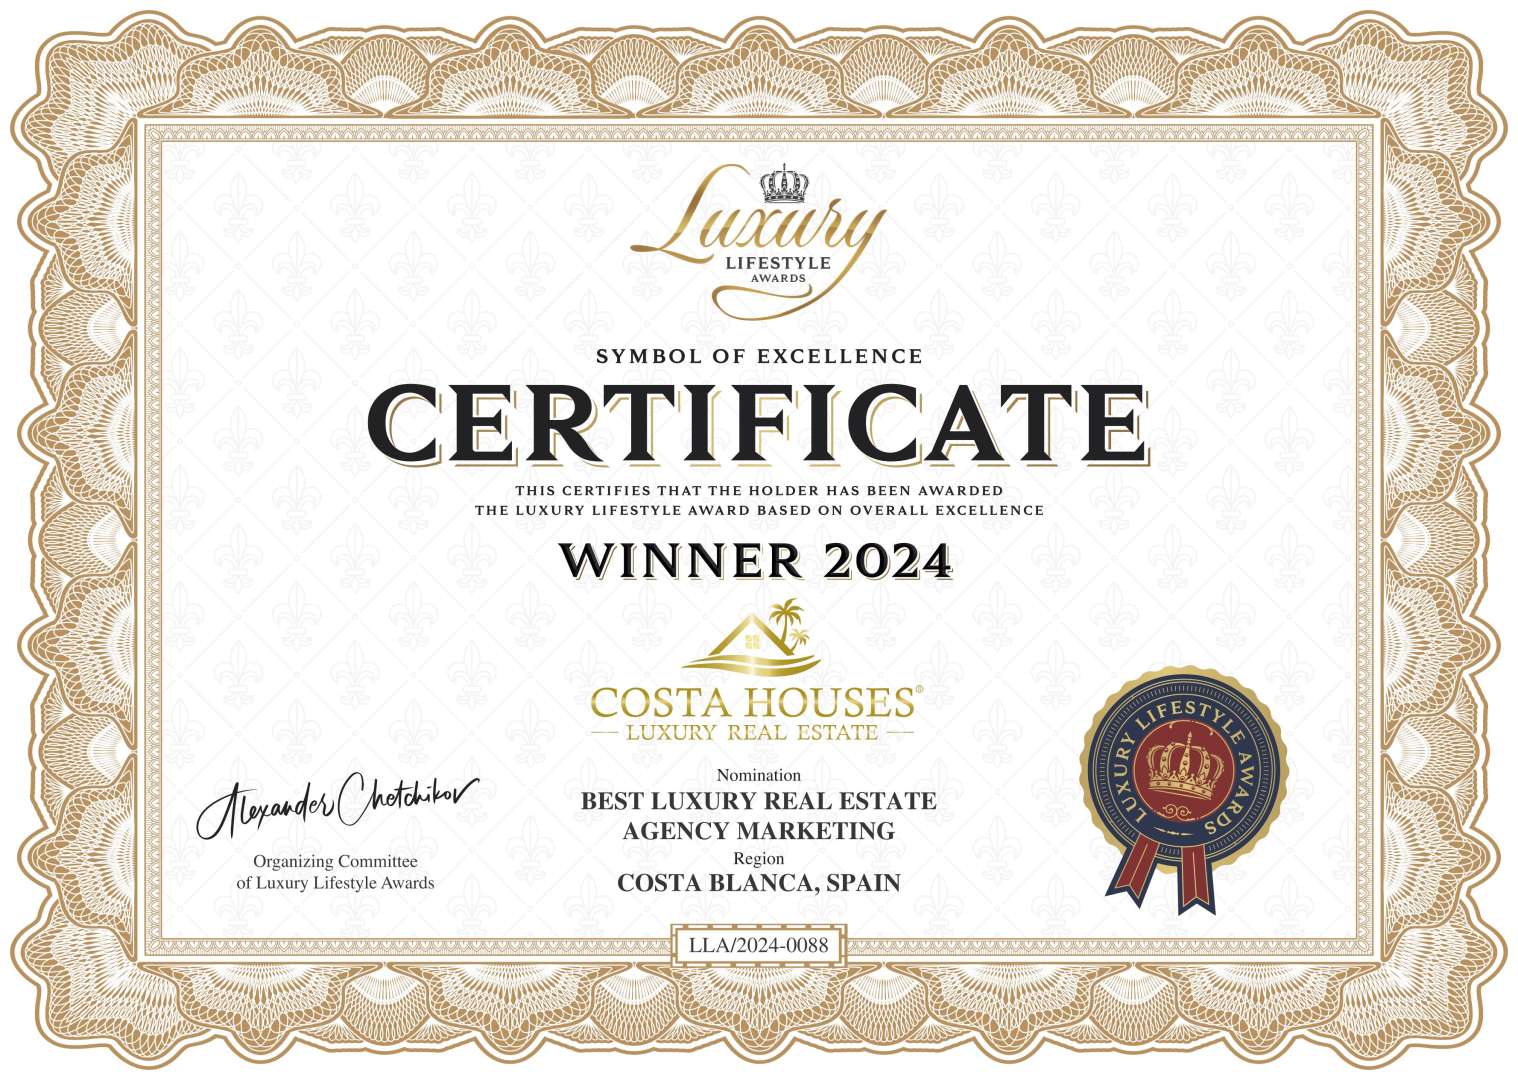 COSTA HOUSES ®️ - Winner Luxury LIFESTYLE AWARDS 2024 | Best Luxury Real Estate Agency Marketing Costa Blanca Spain